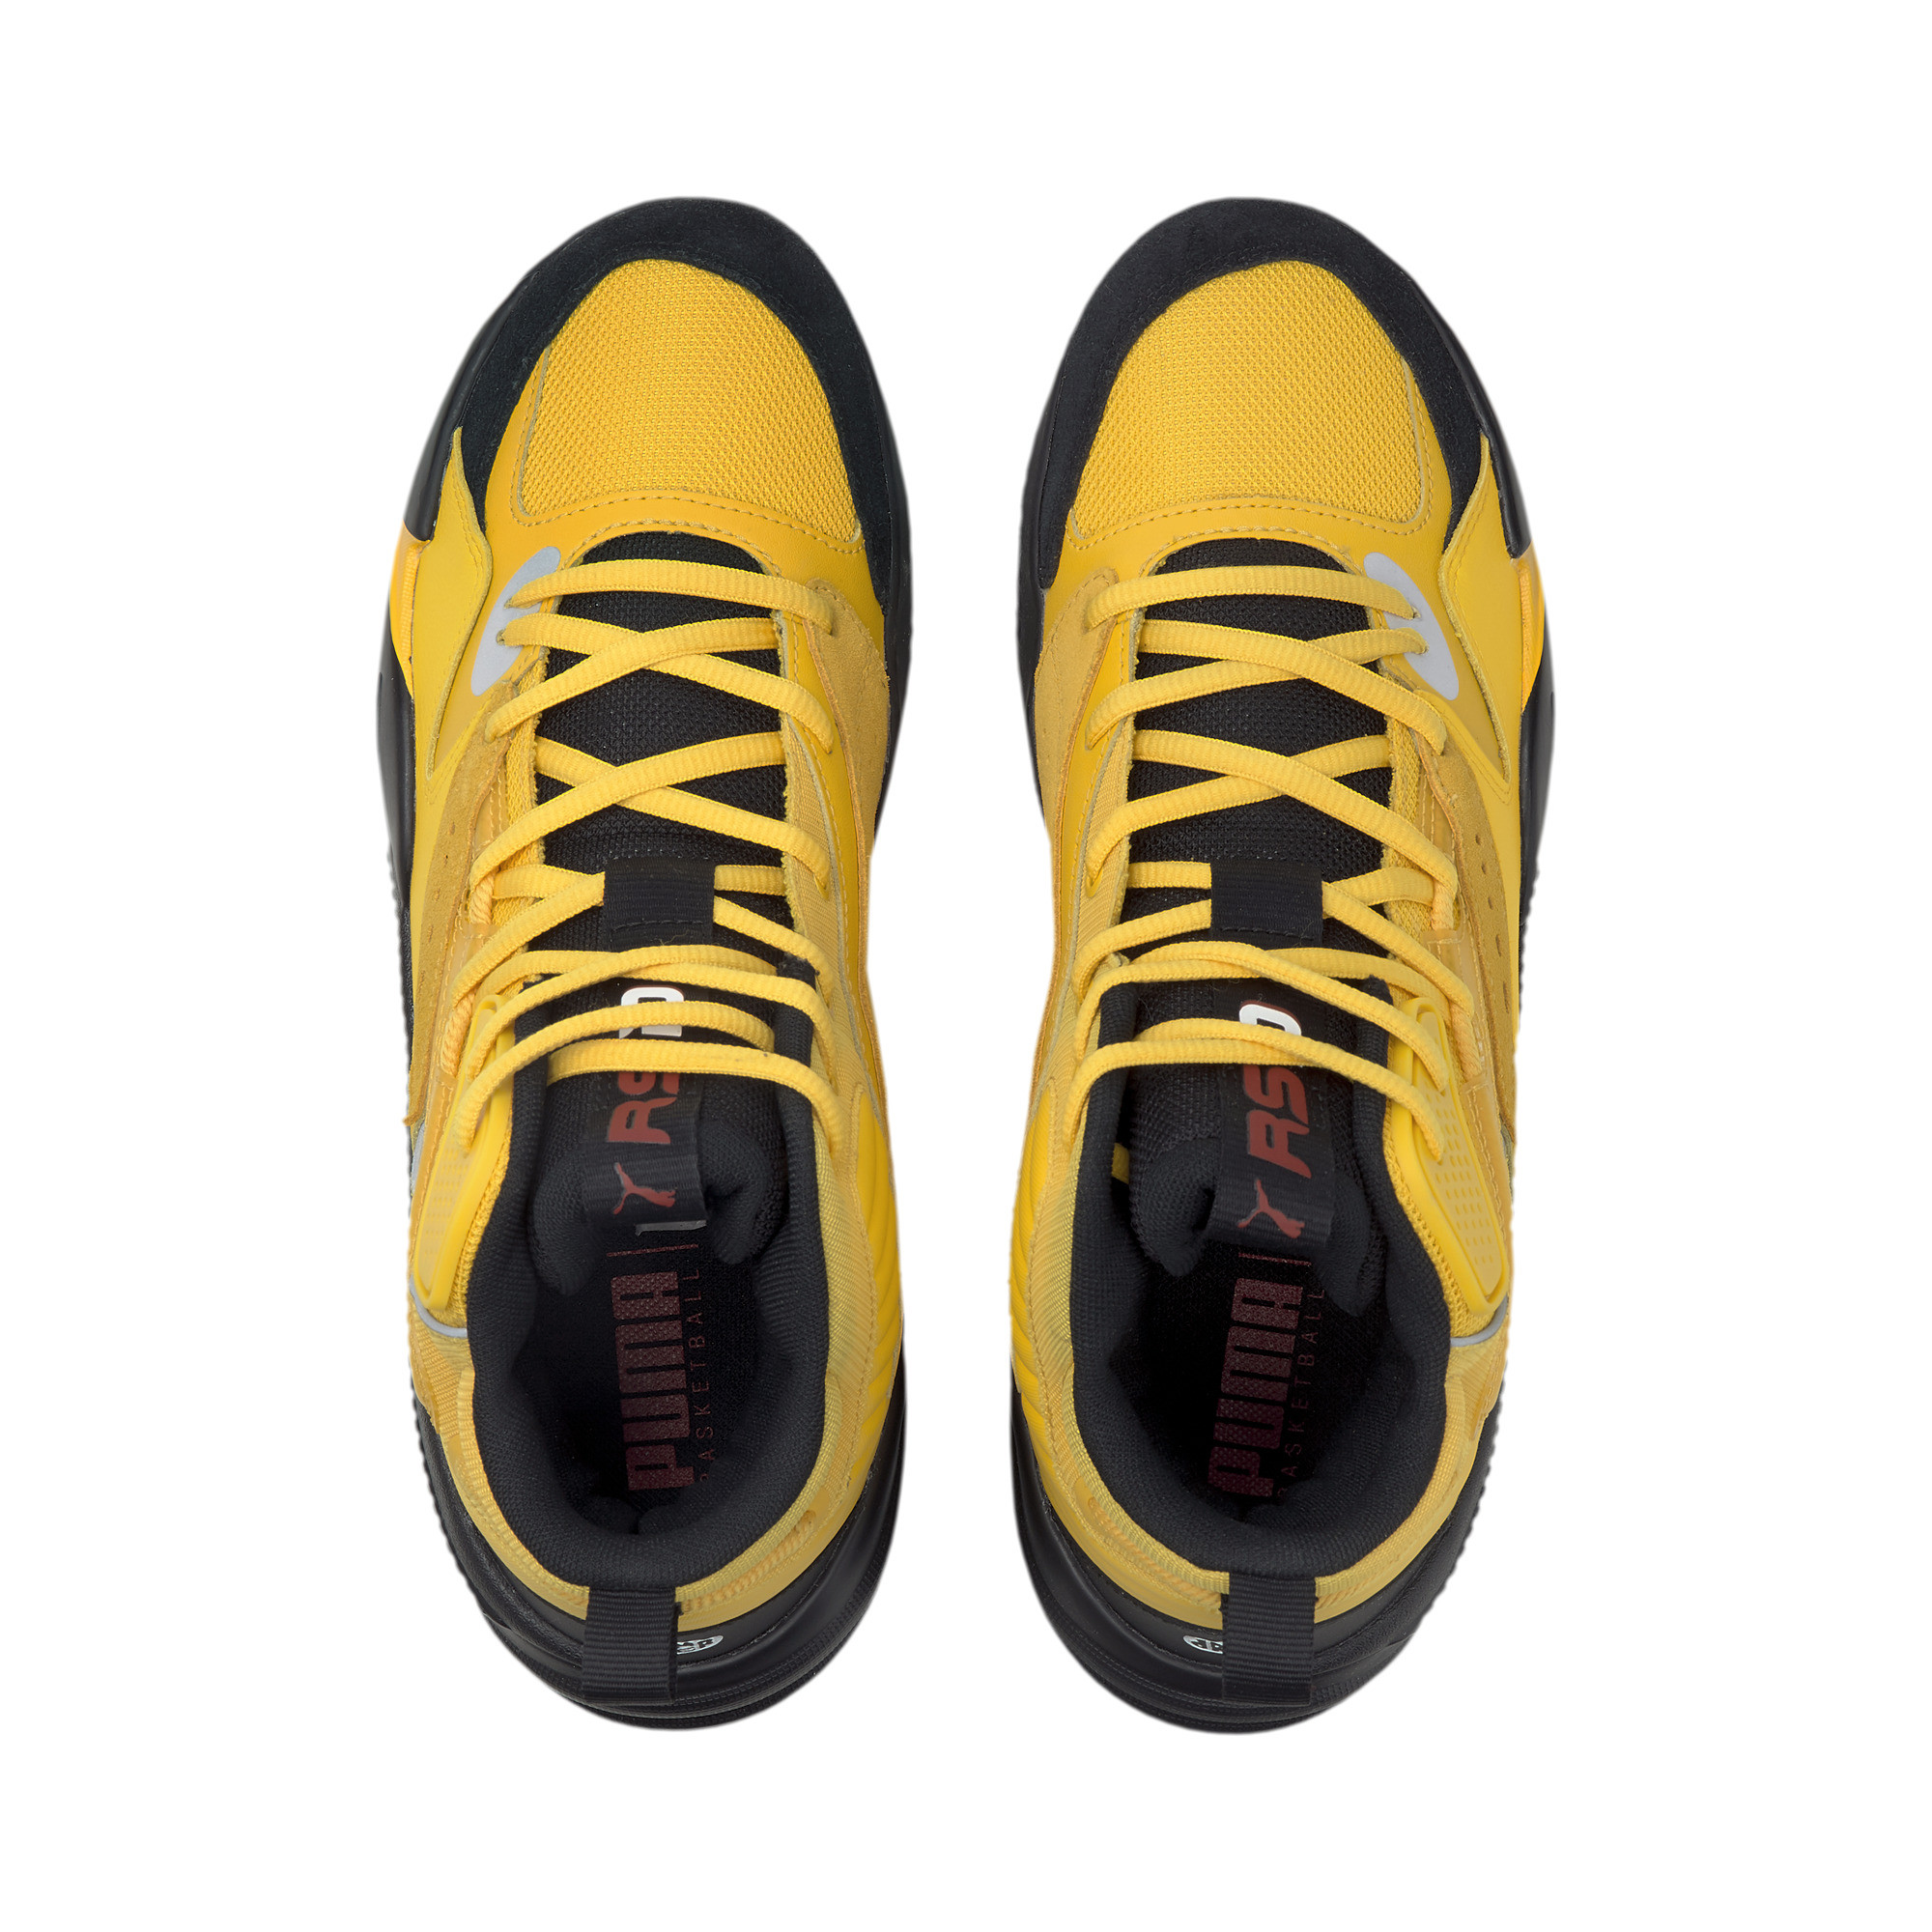 J. Cole Announces His 2nd Signature Basketball Sneaker, The PUMA DREAMER 2